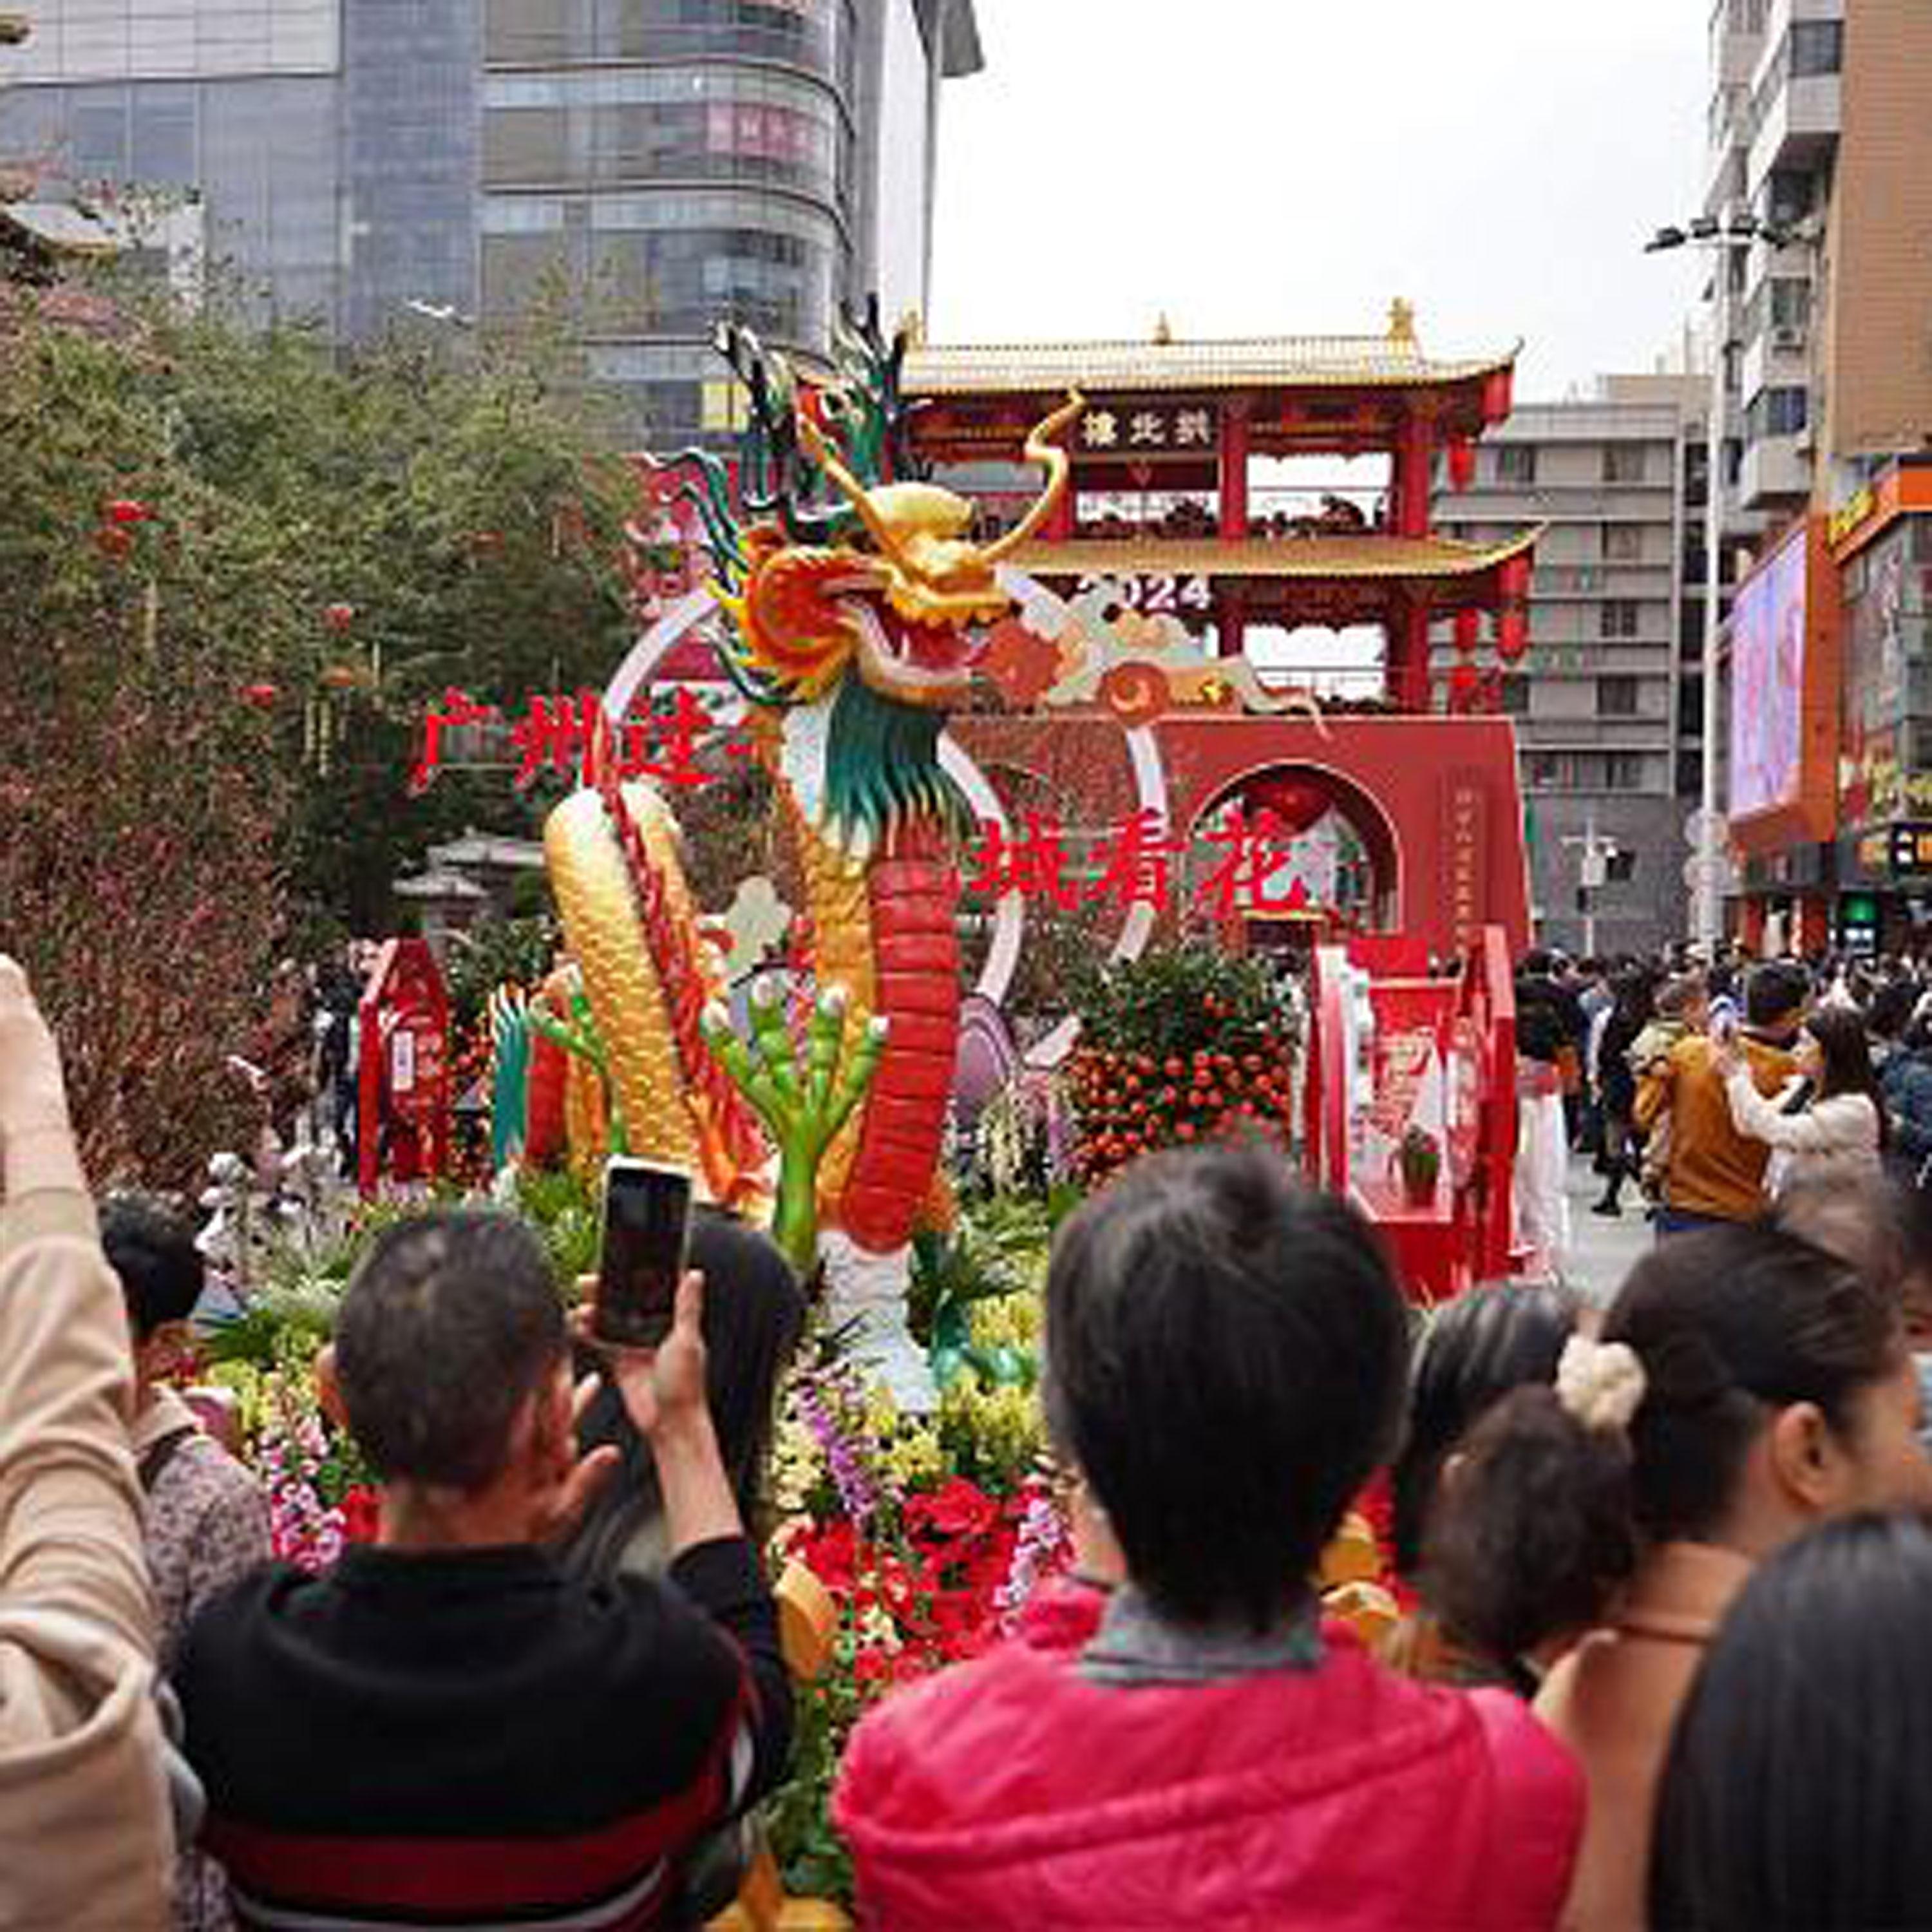 Southern China popular among New Year travelers